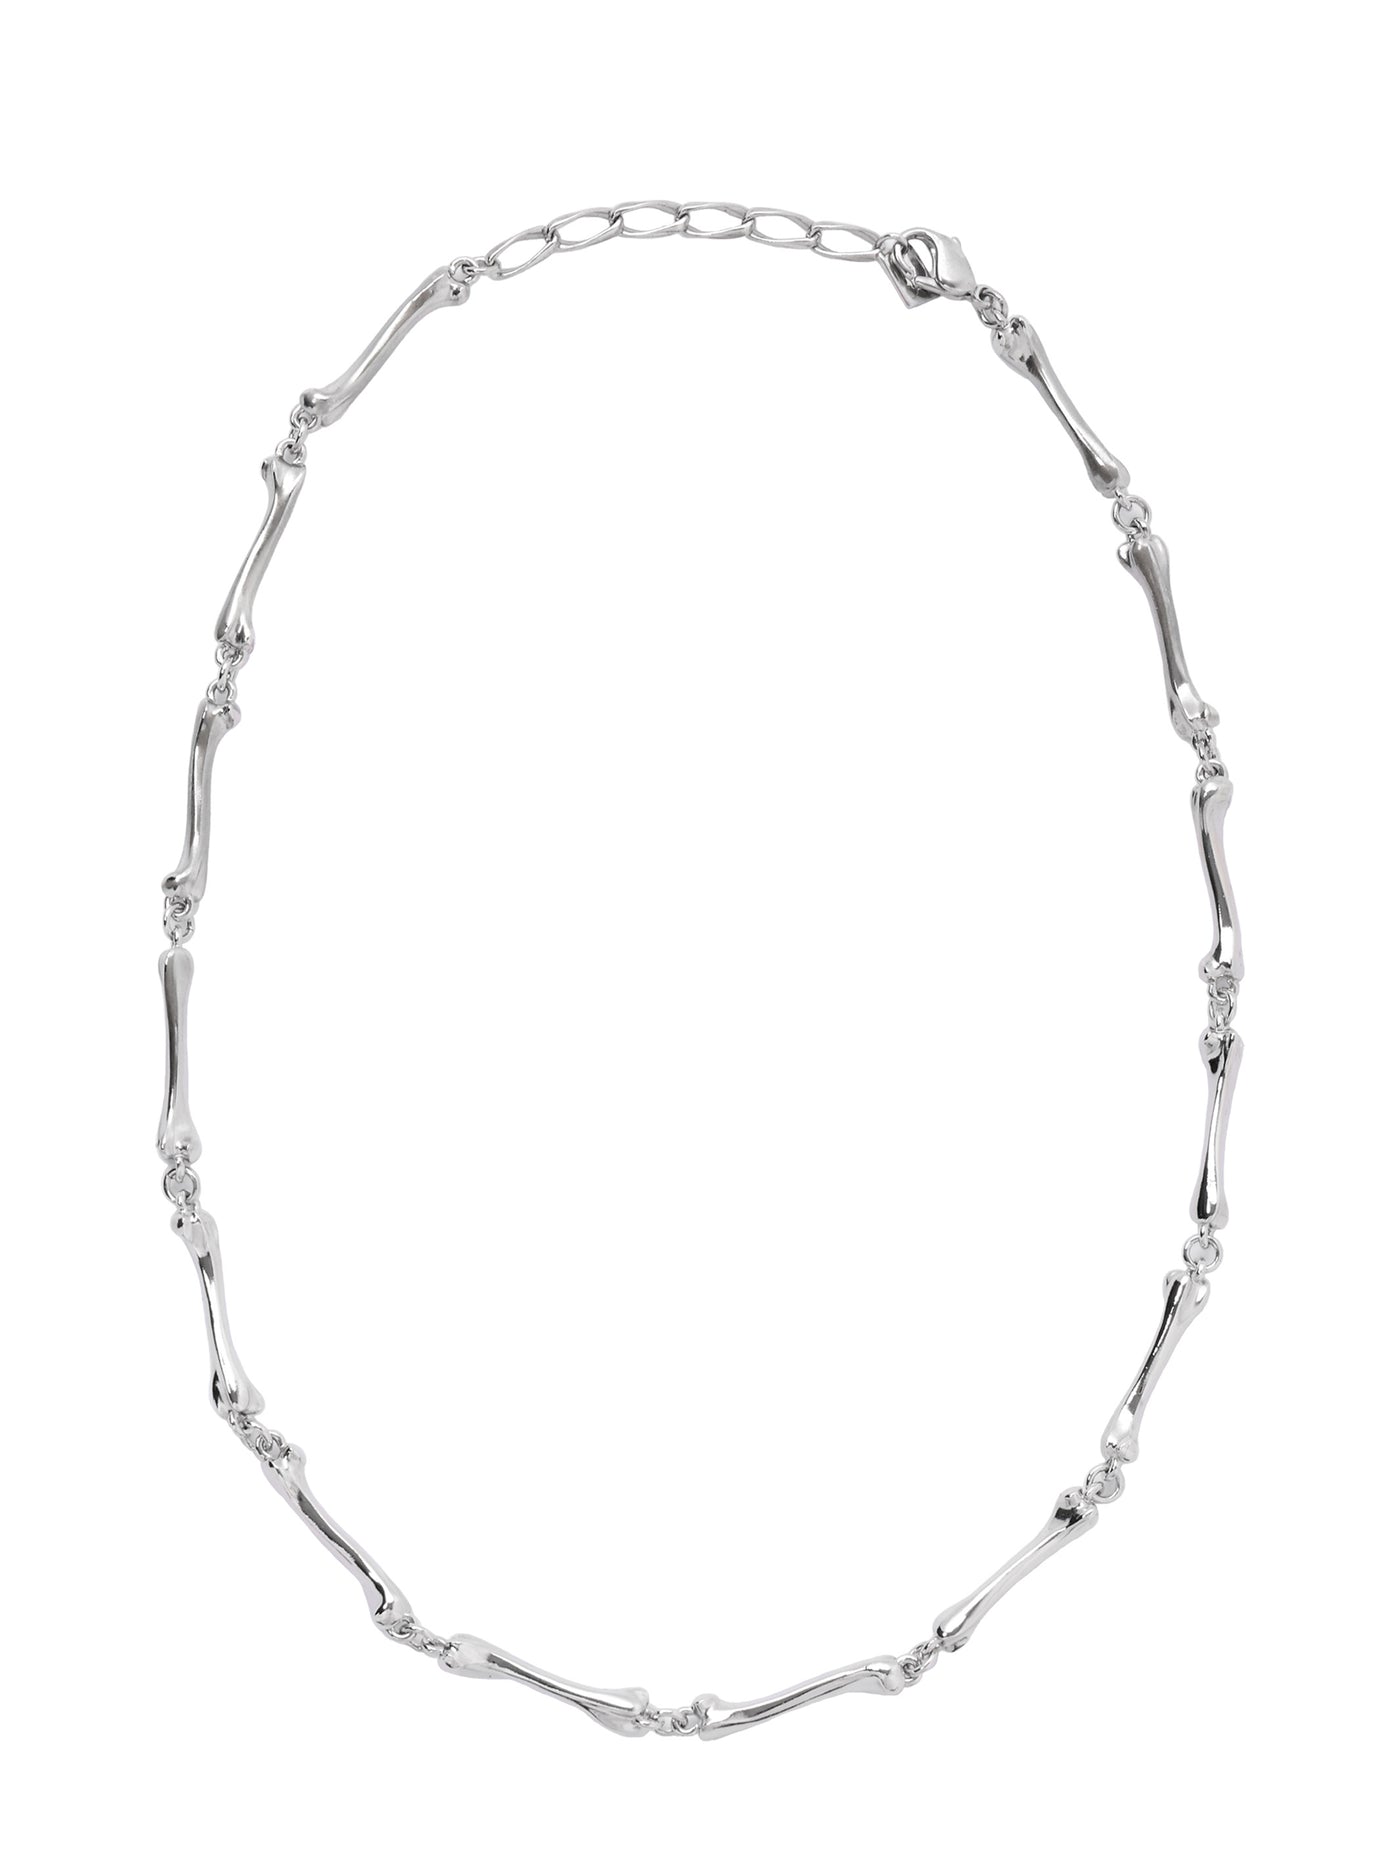 Bone connected short necklace